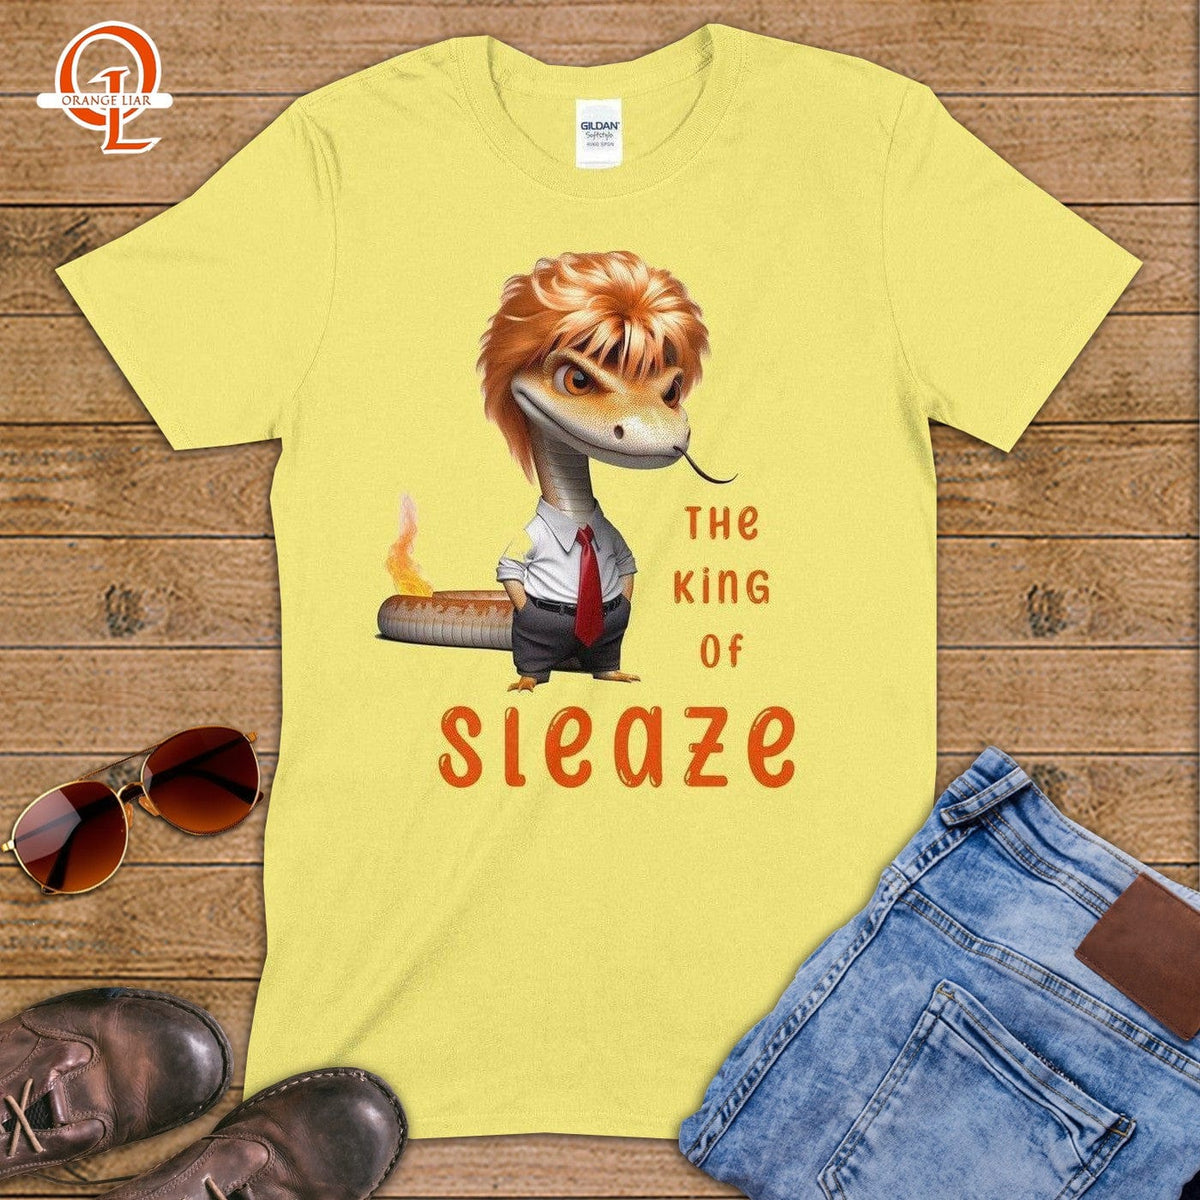 The King of Sleaze ~ T-Shirt-Orange Liar